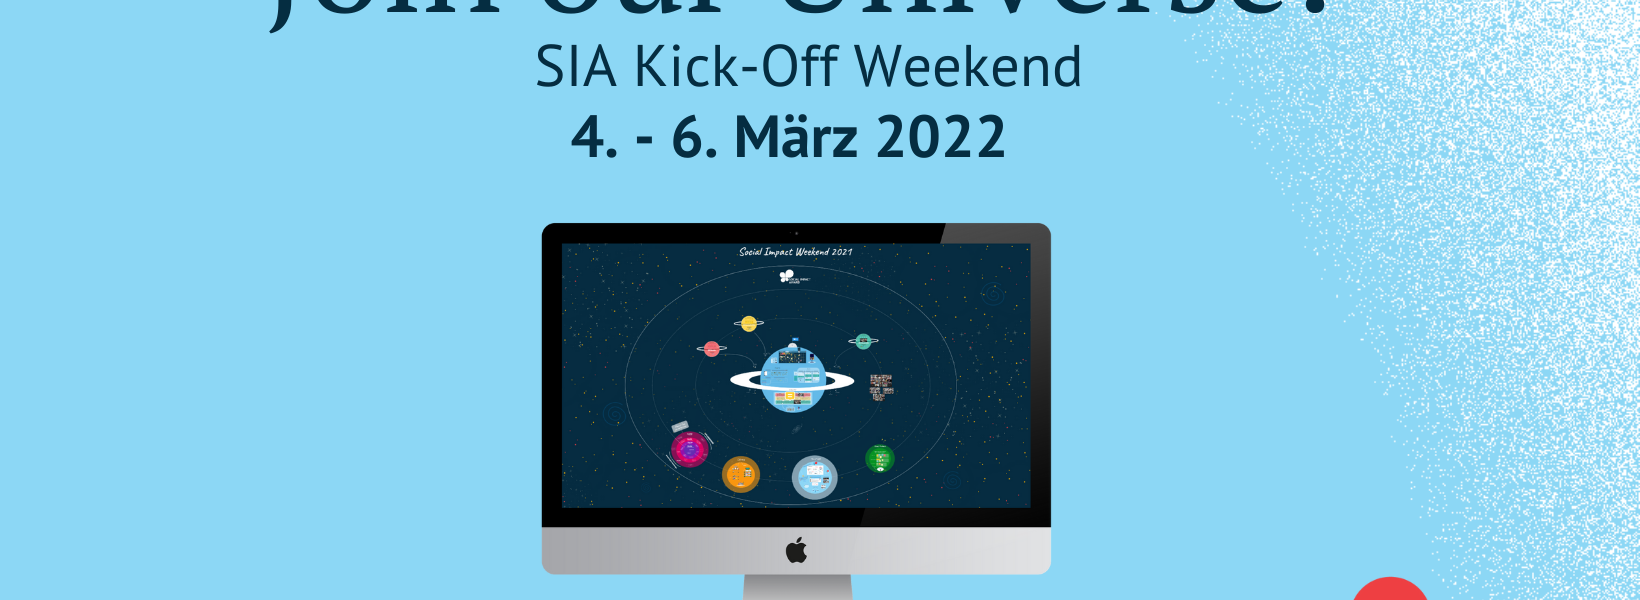 Social Impact Award Kick-off Weekend 2022